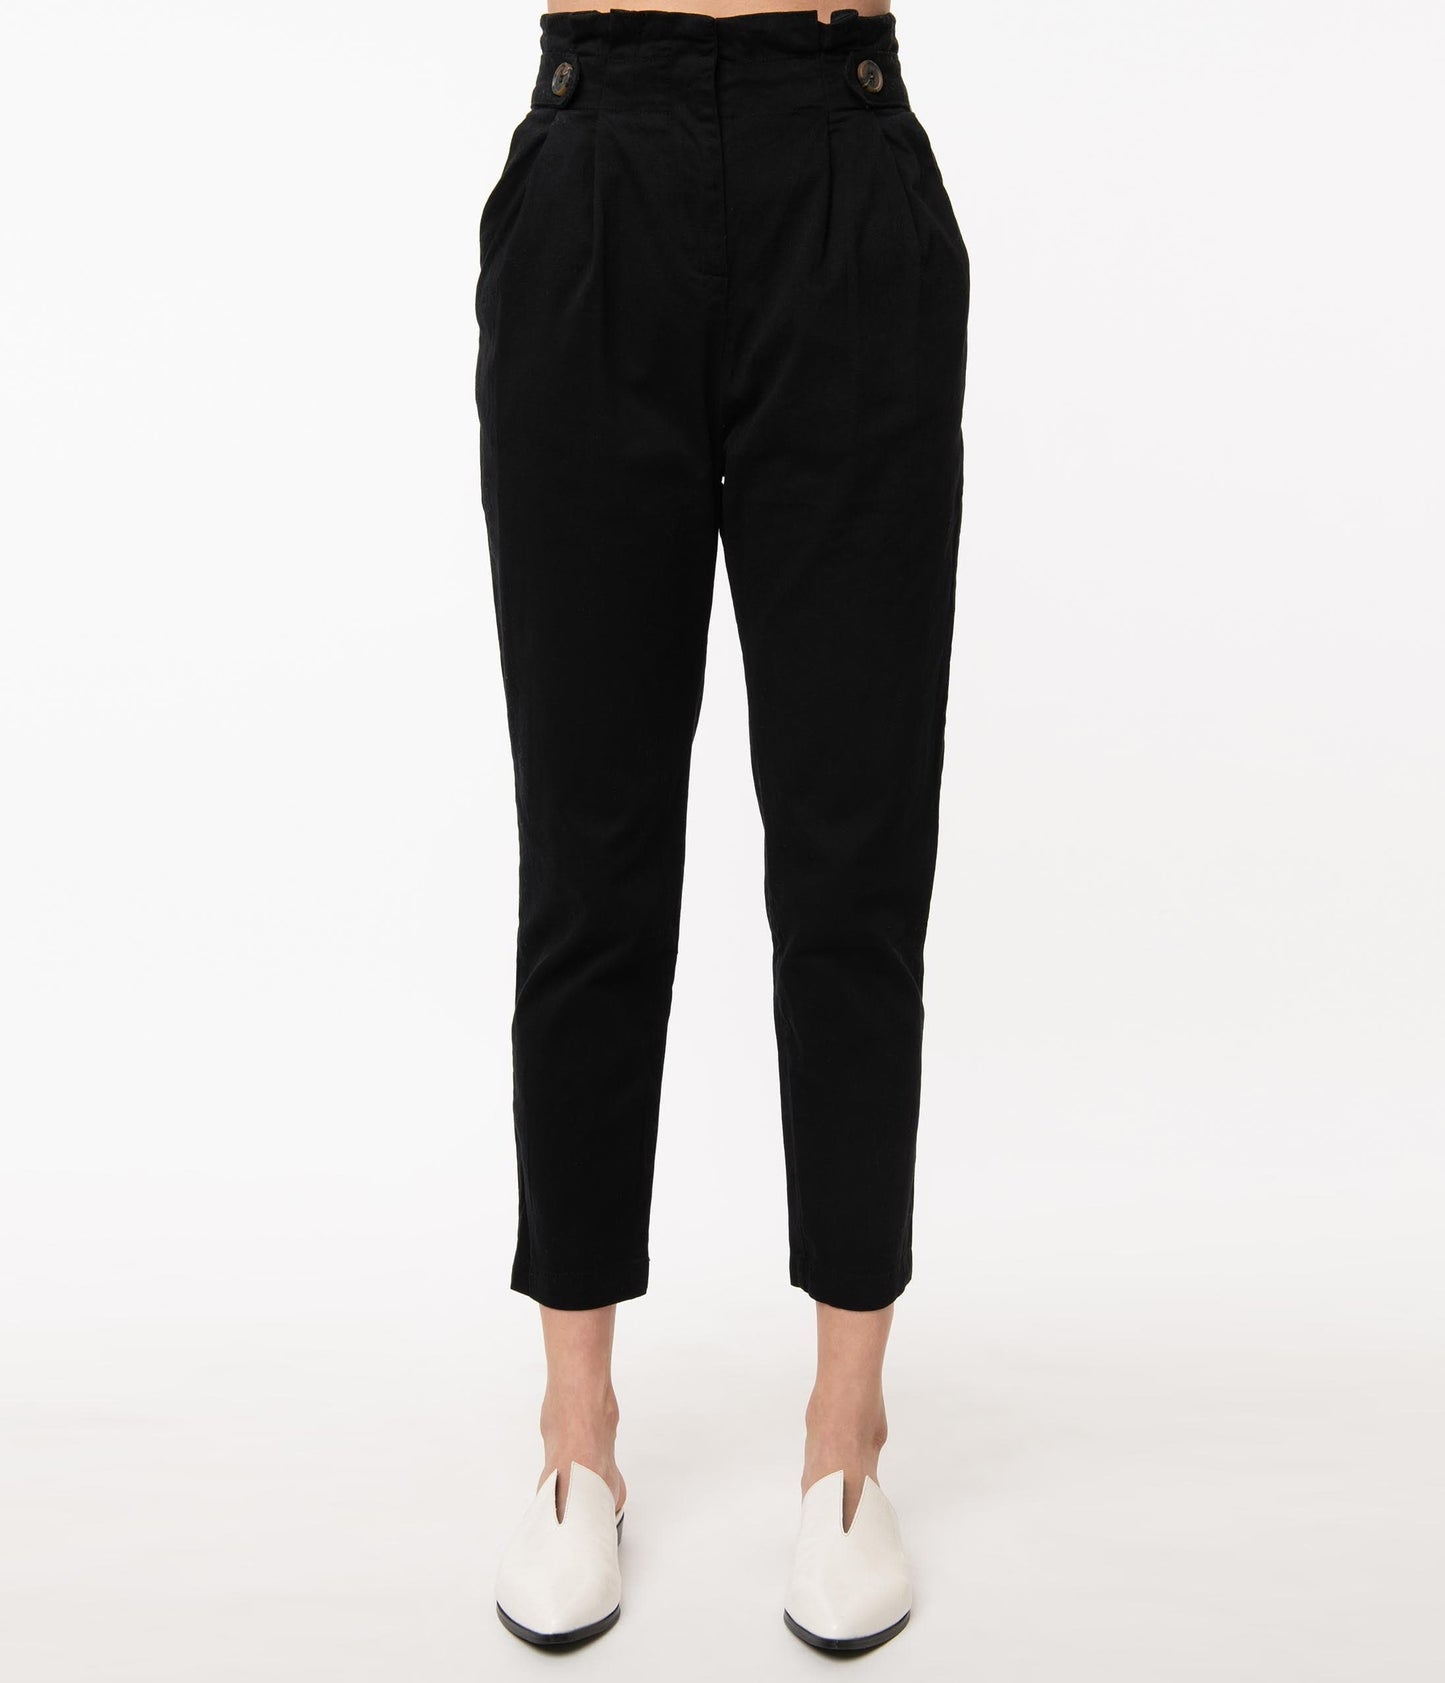 1960s Style Black High Waist Crop Pants